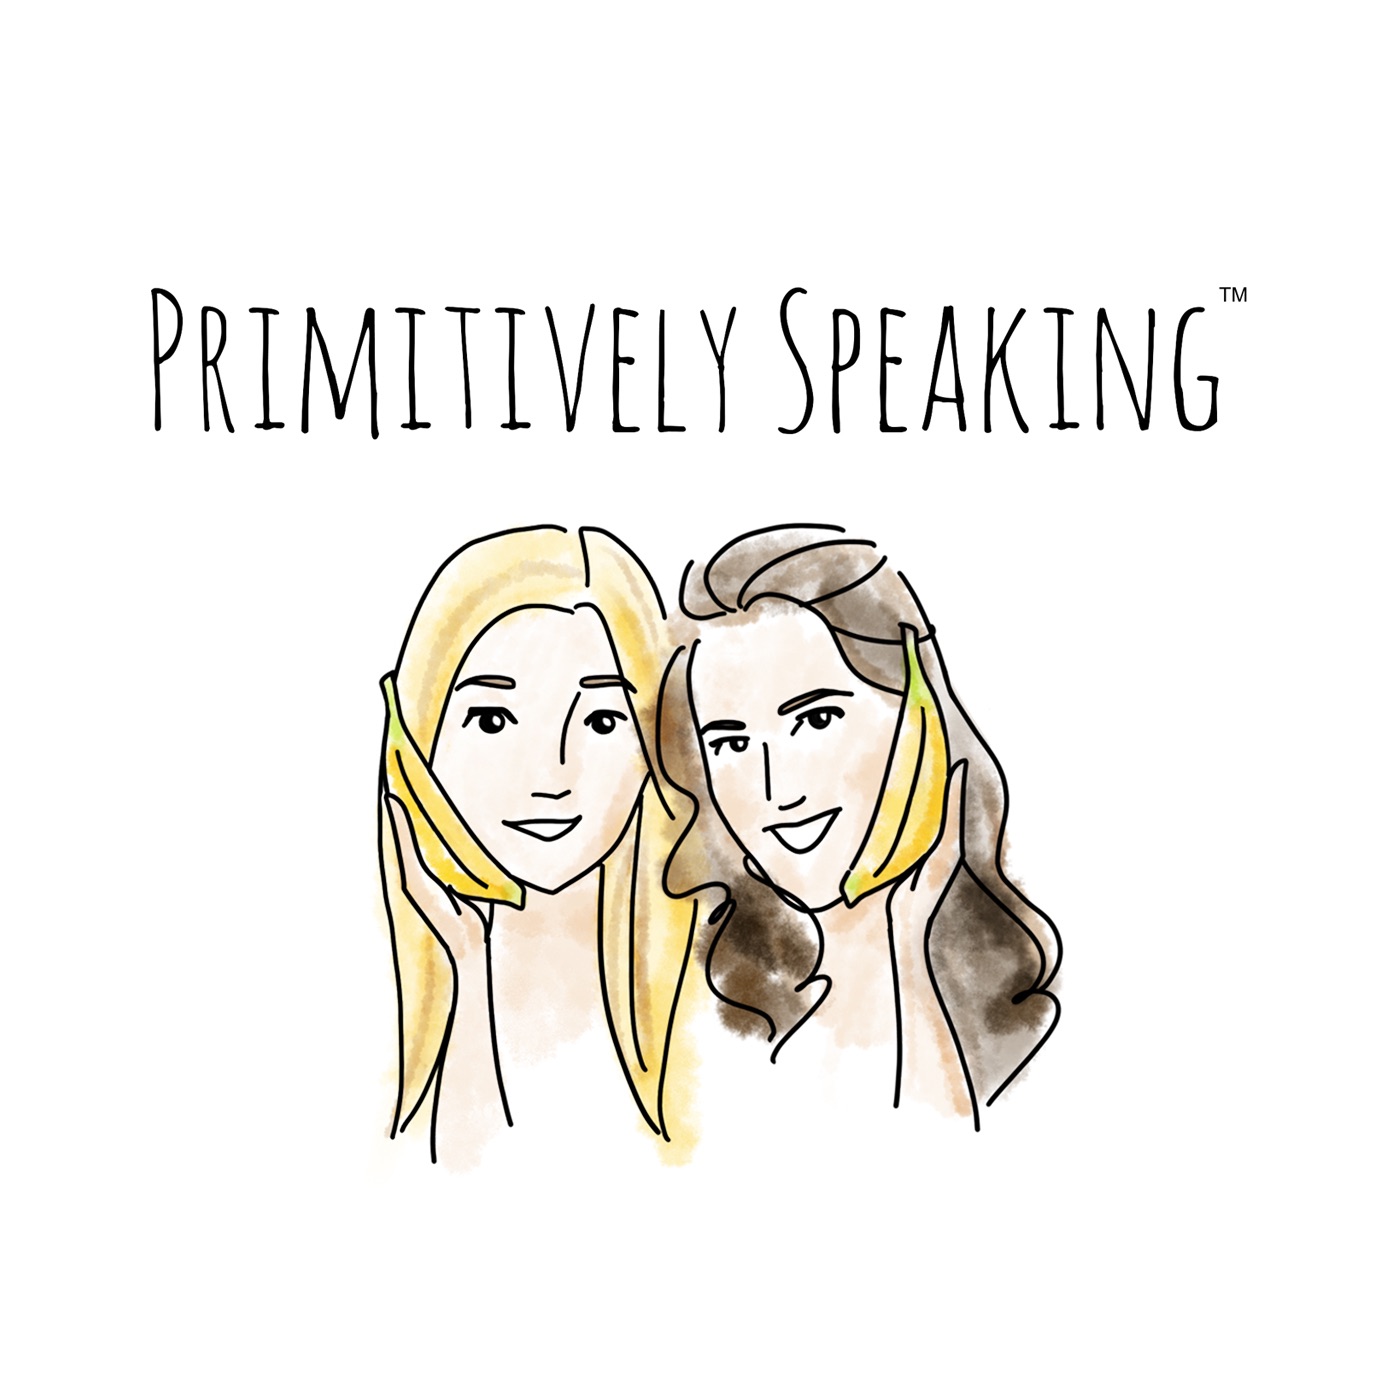 Primitively Speaking